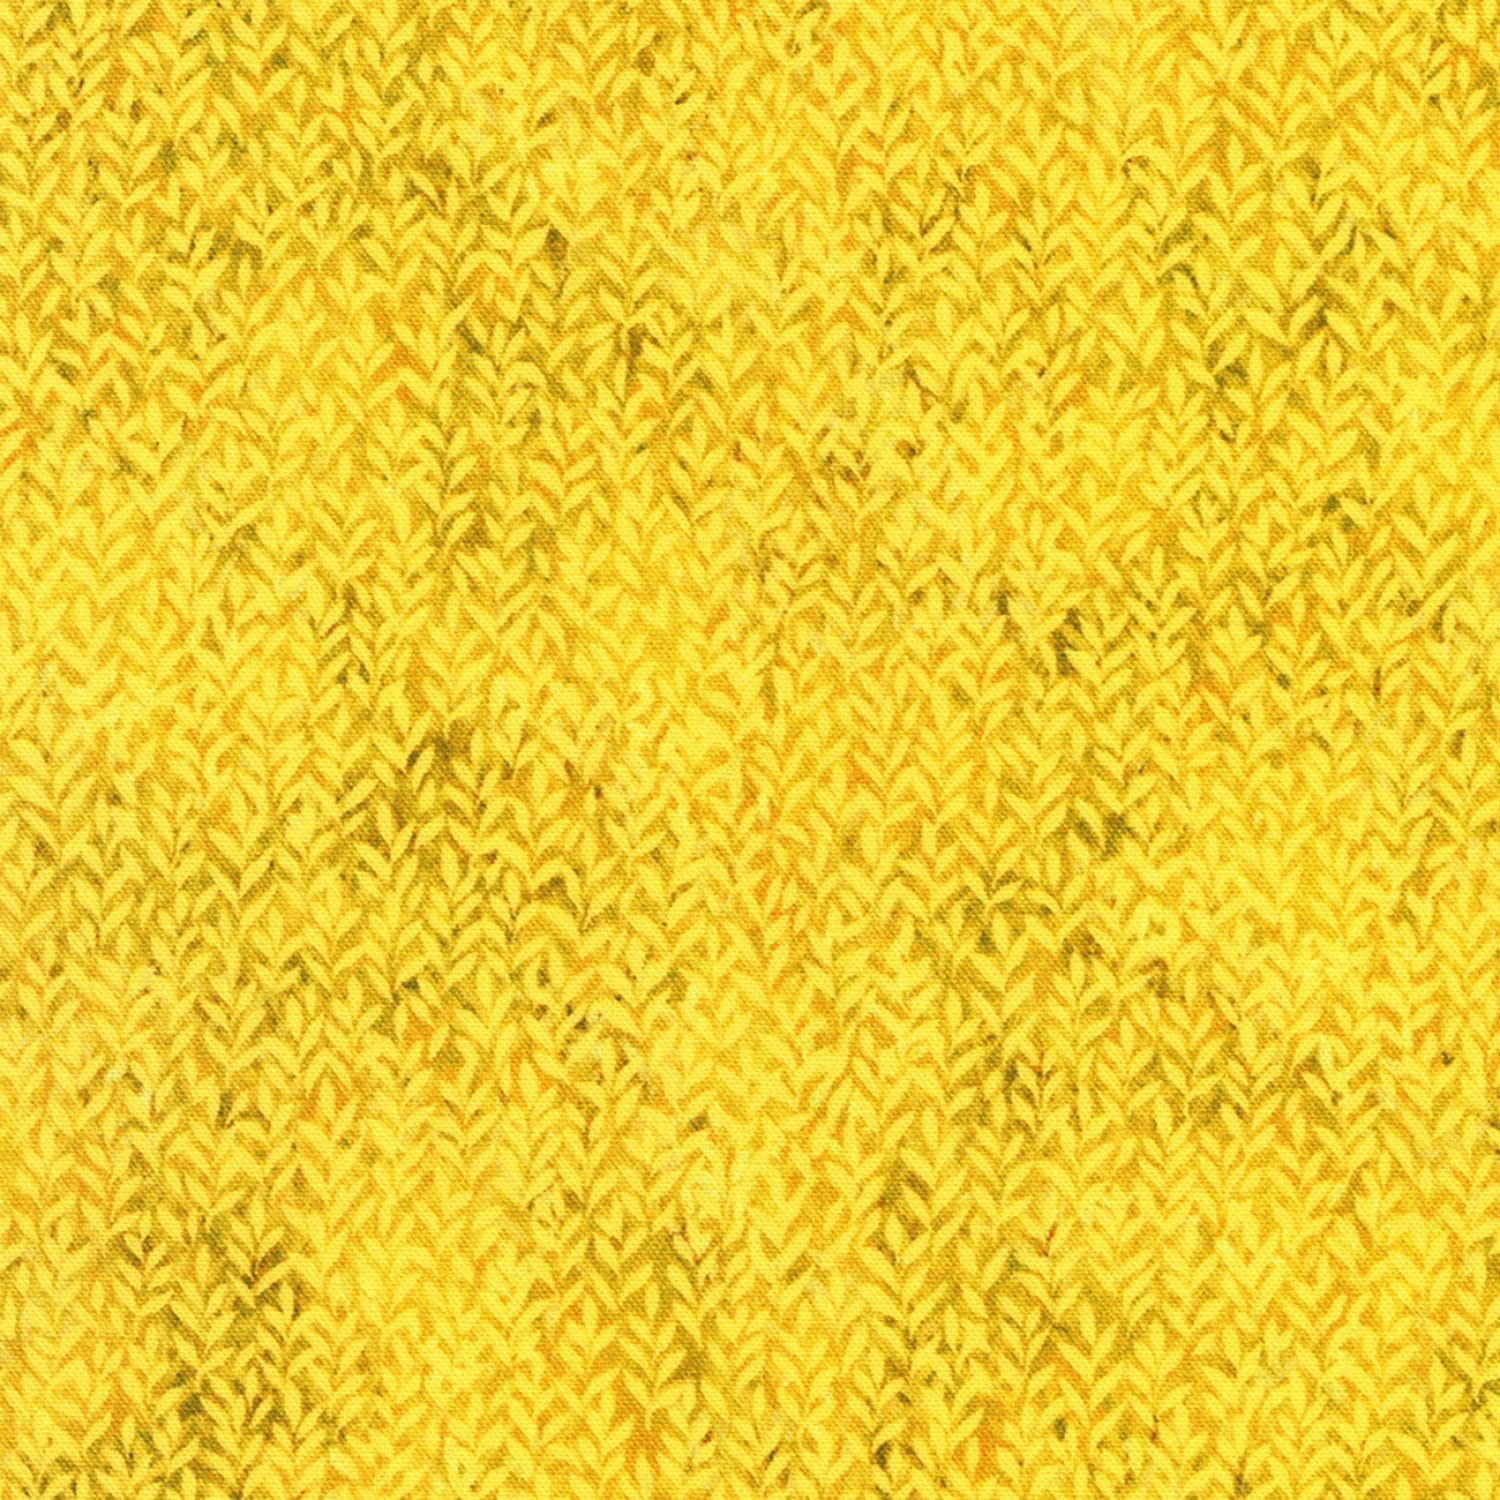 Painterly Trees - Mustard Yellow Blender Fabric, Robert Kaufman ABXD-22496-135 Mustard, Yellow Little Leaves Fabric, By the Yard